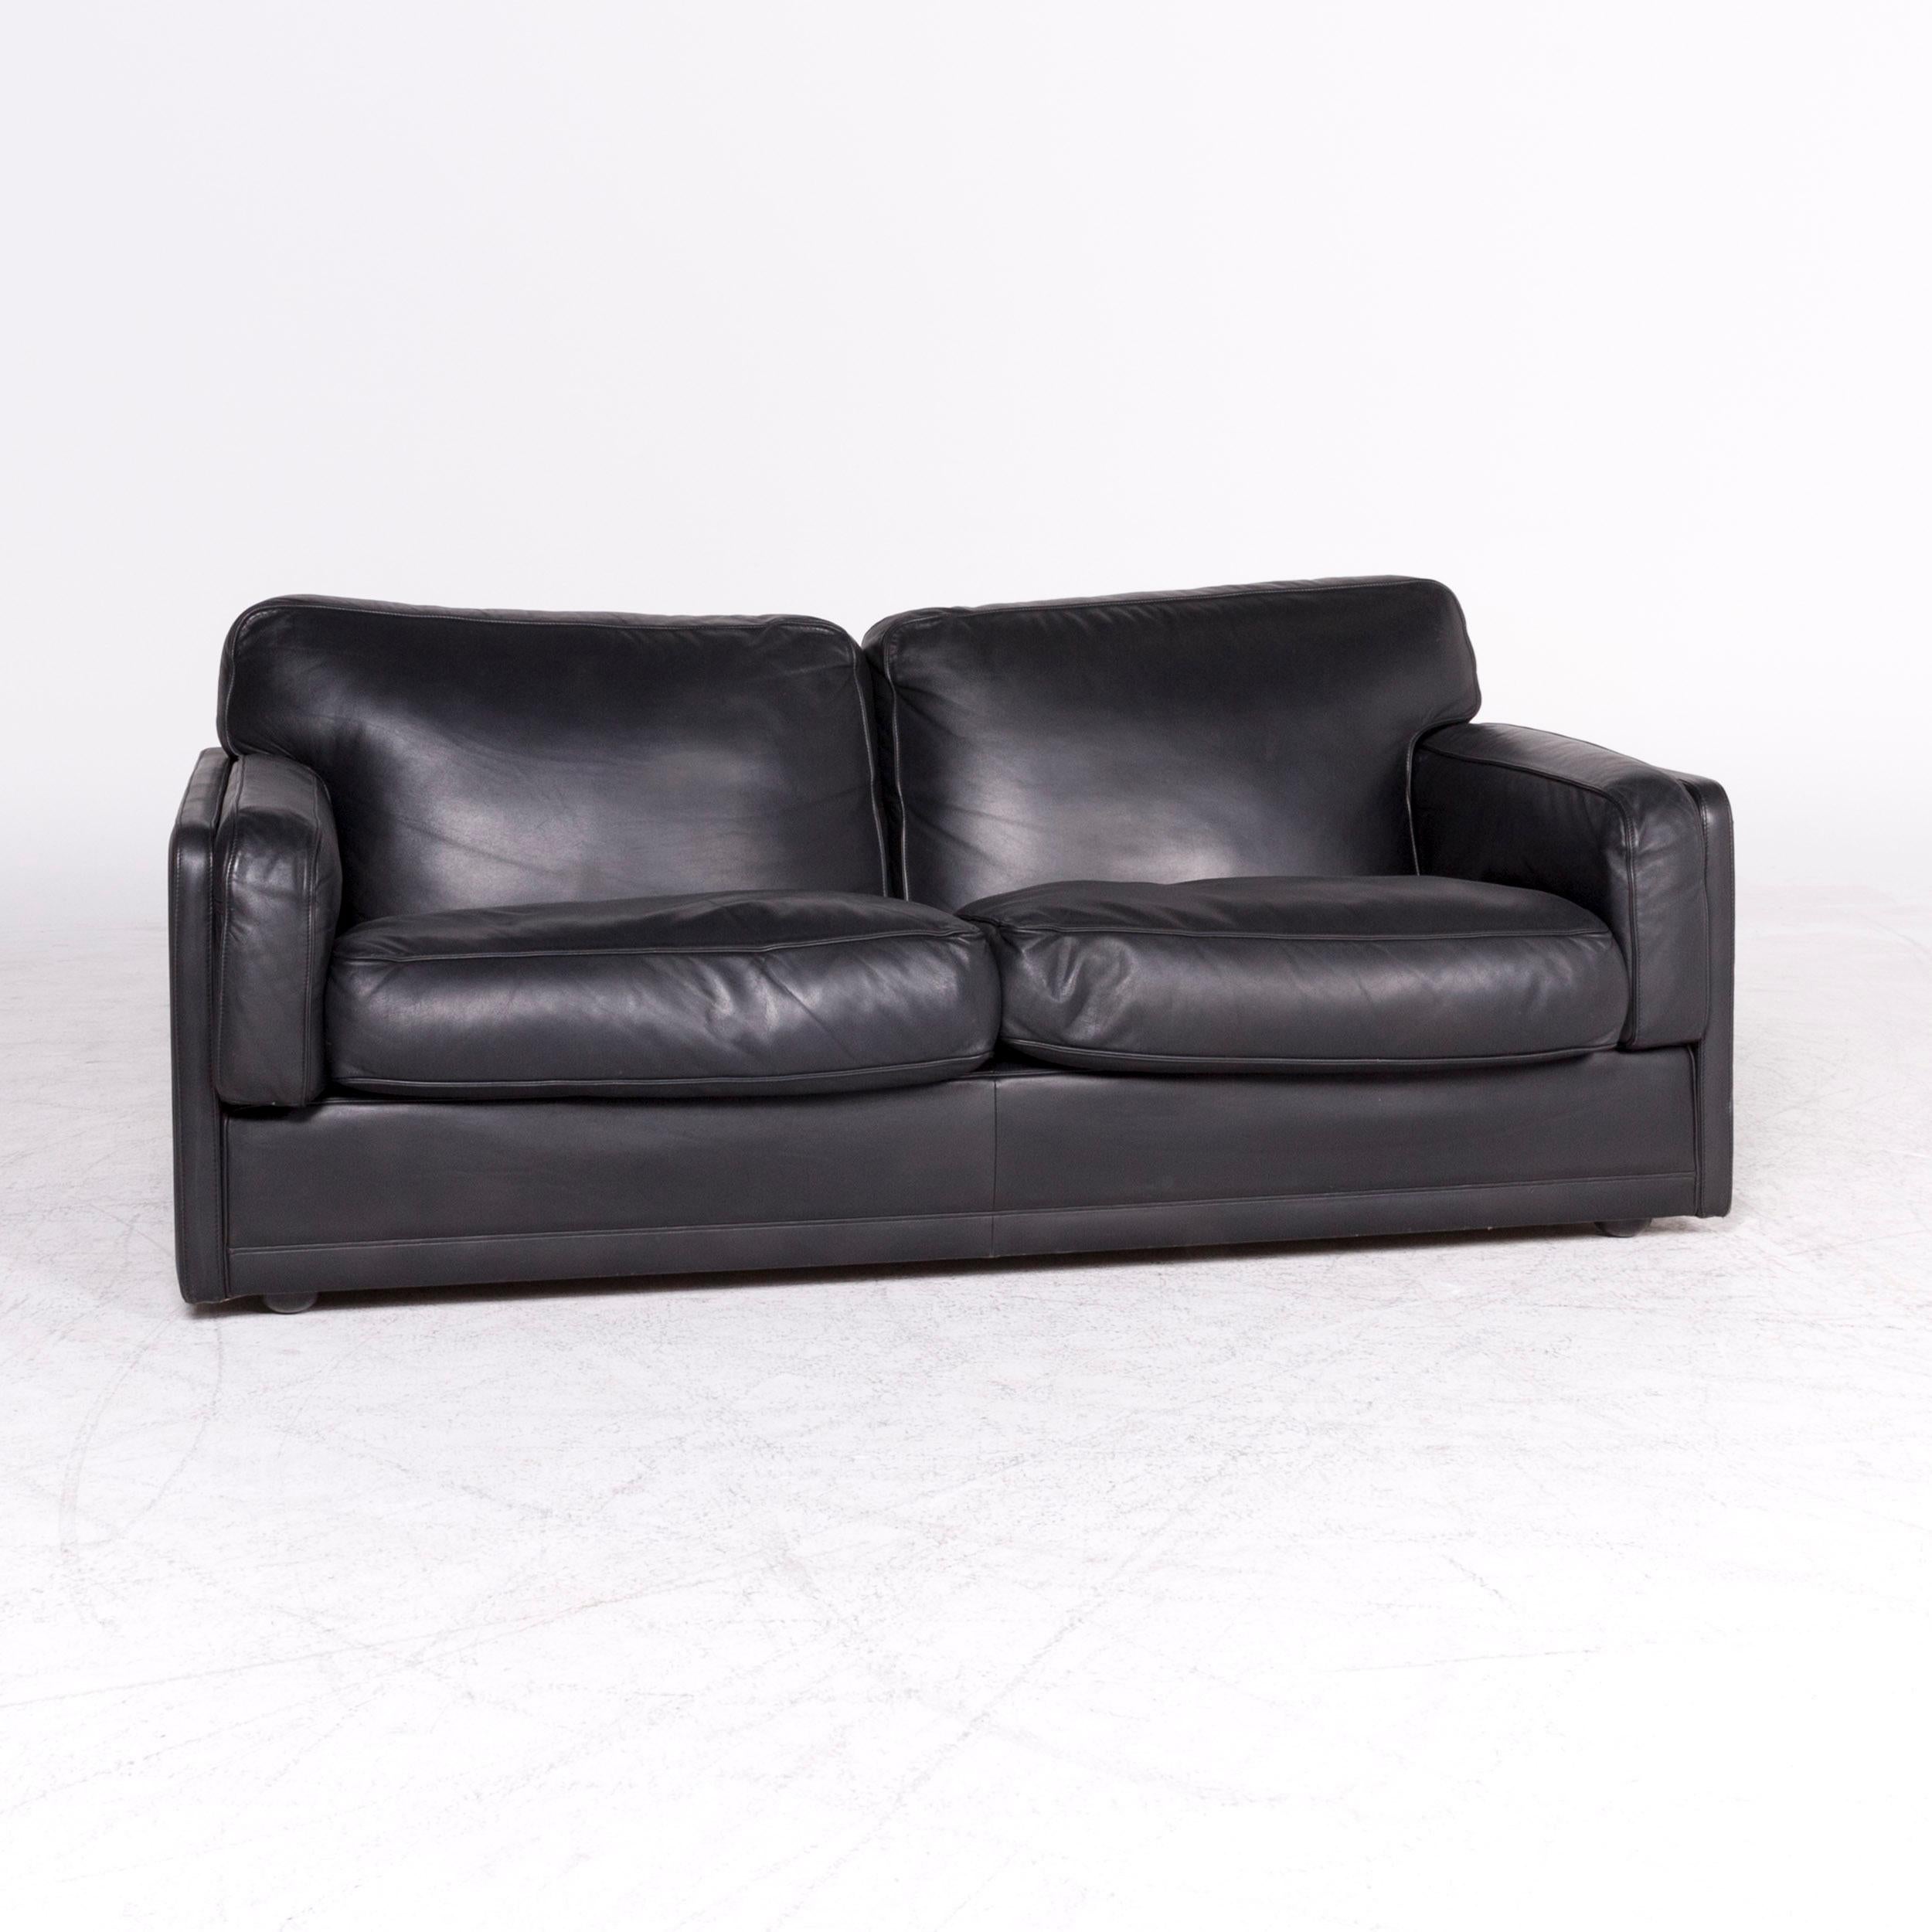 Modern Poltrona Frau Socrate Designer Leather Sofa Set Black Genuine Leather Two